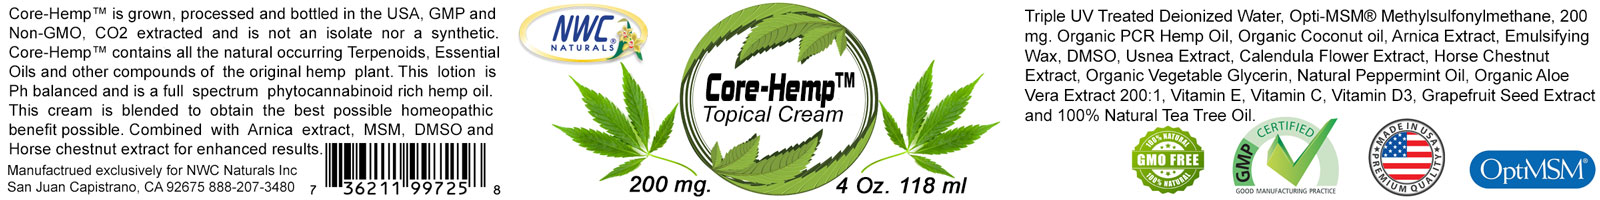 Core-HempTM Topical Cream